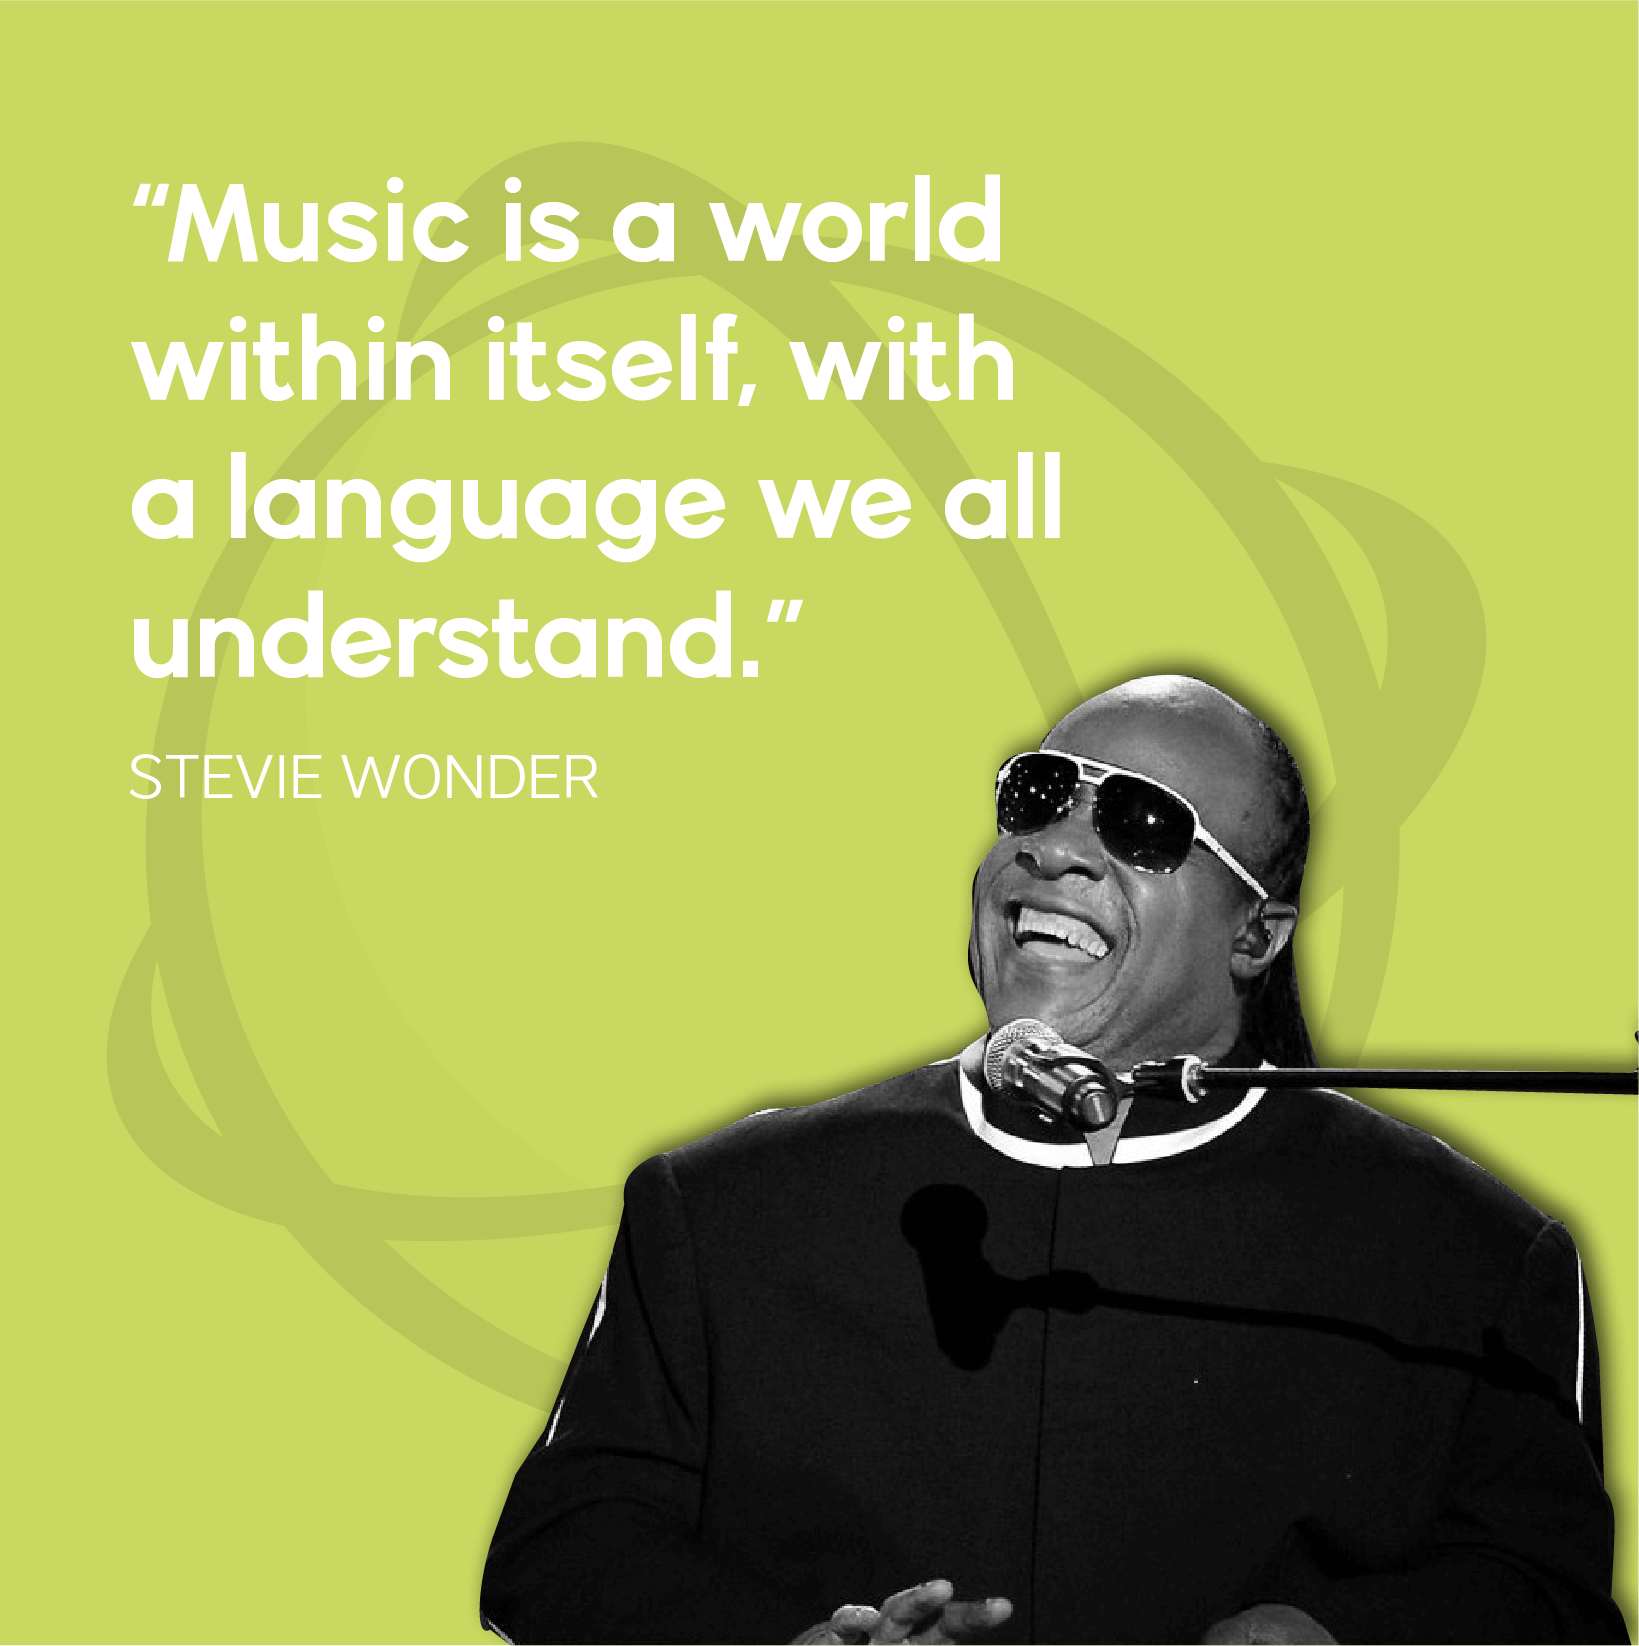 Music and language